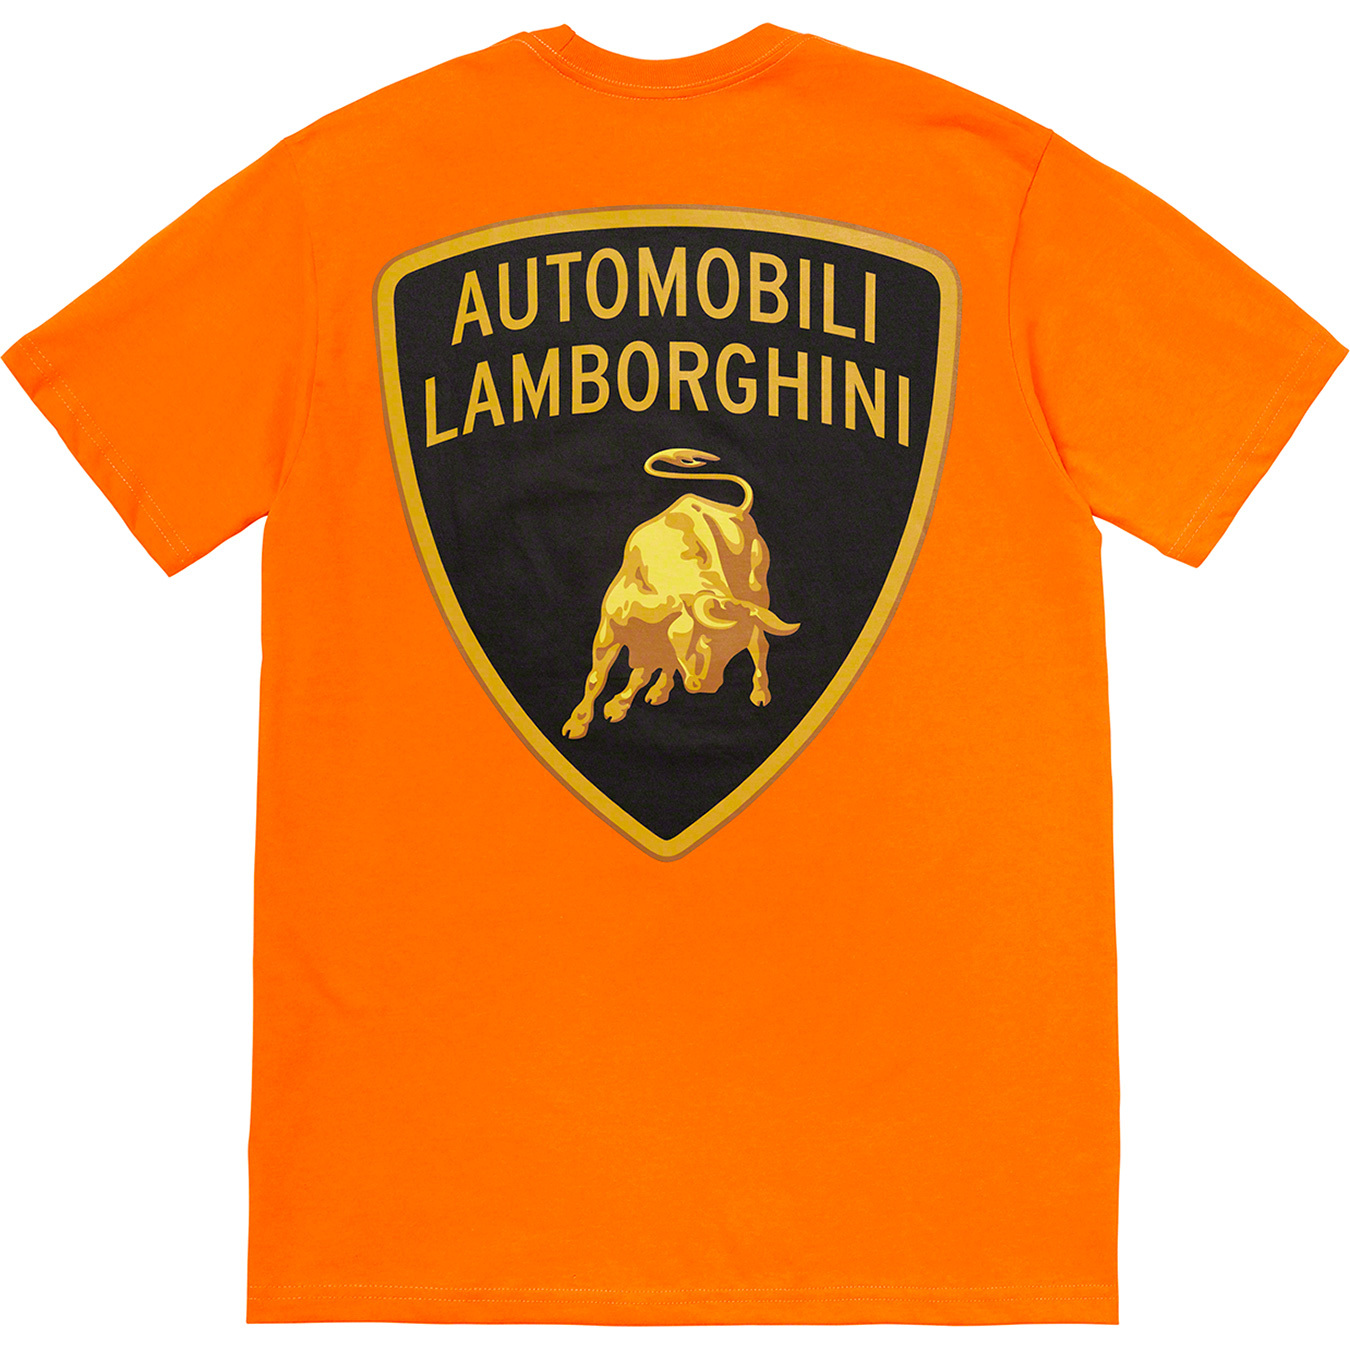 Automobili Lamborghini Tee - spring summer 2020 - Supreme